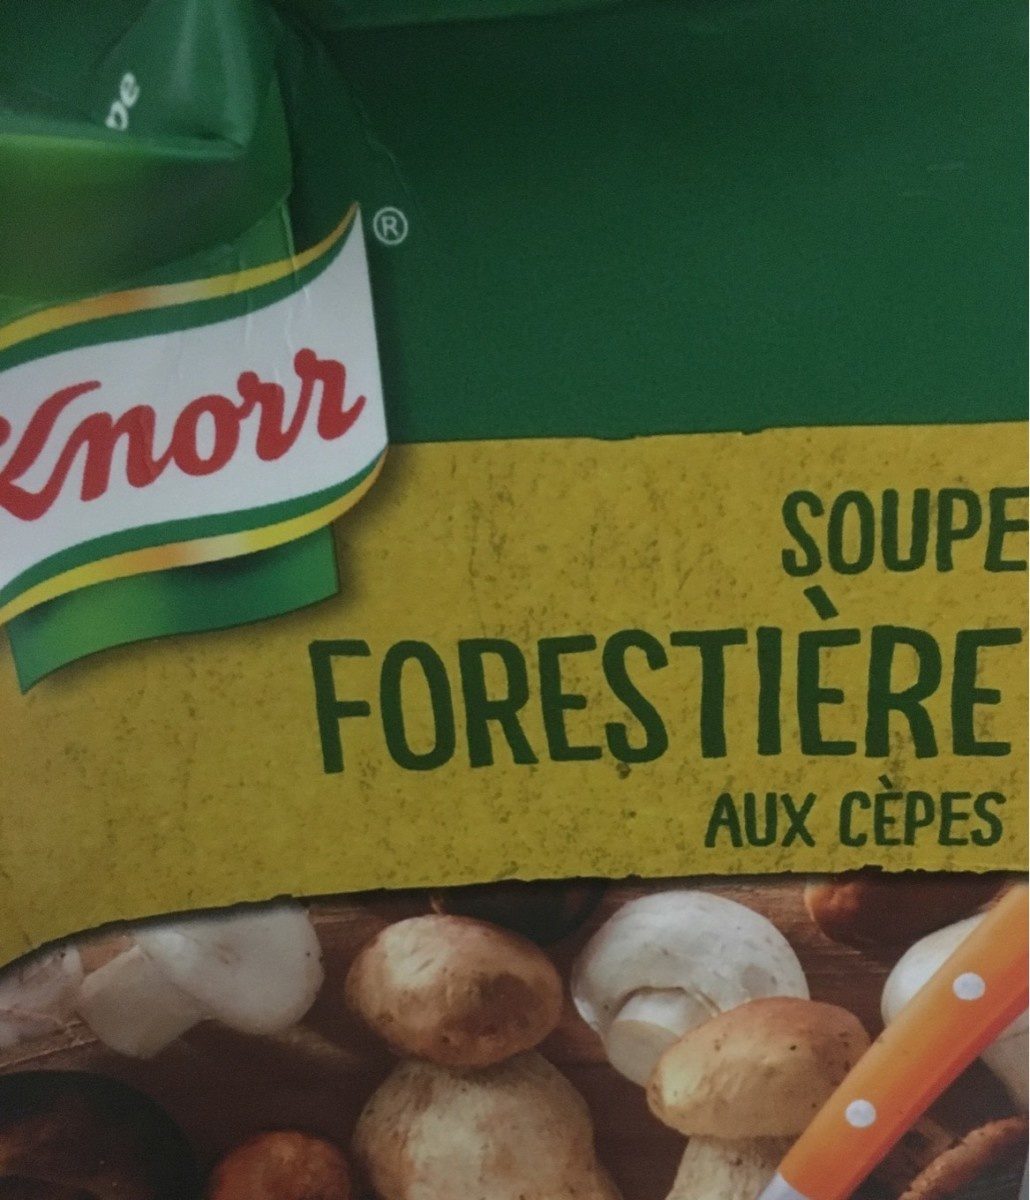 Soupe forestiere aux cepes - Product - fr